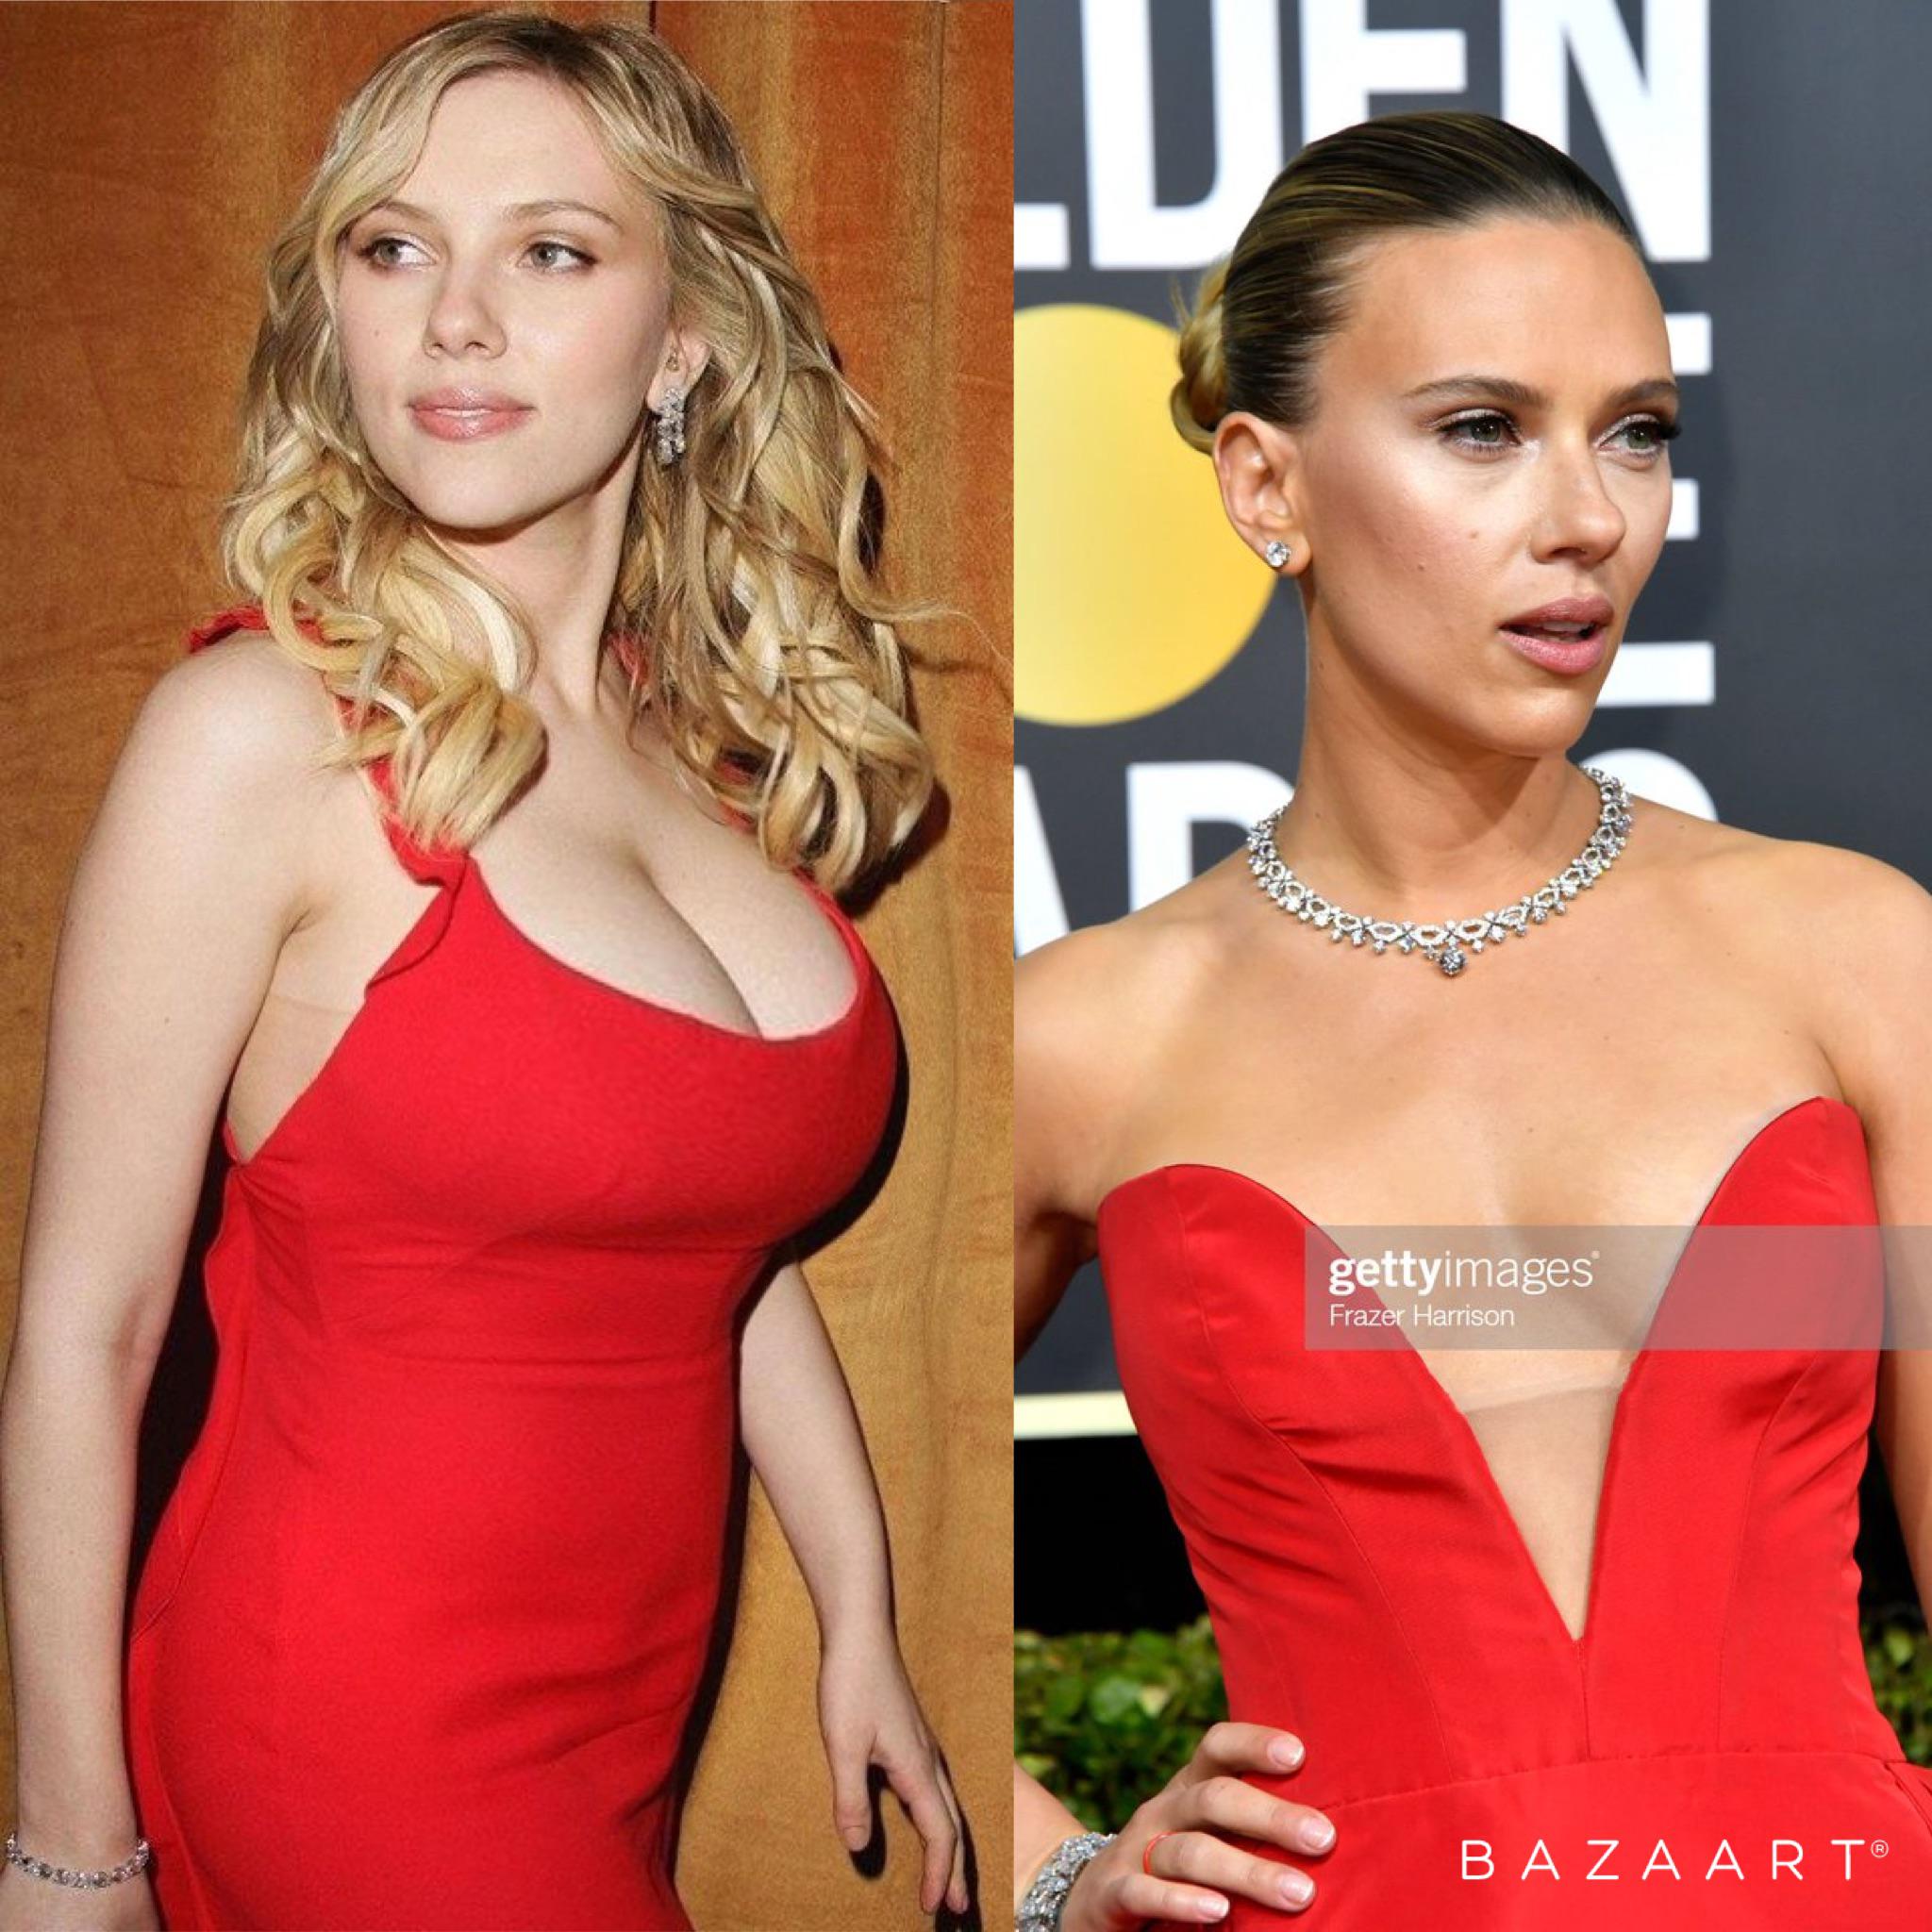 Scarlett Johansson - Do you guys prefer bigger or skinny? 4